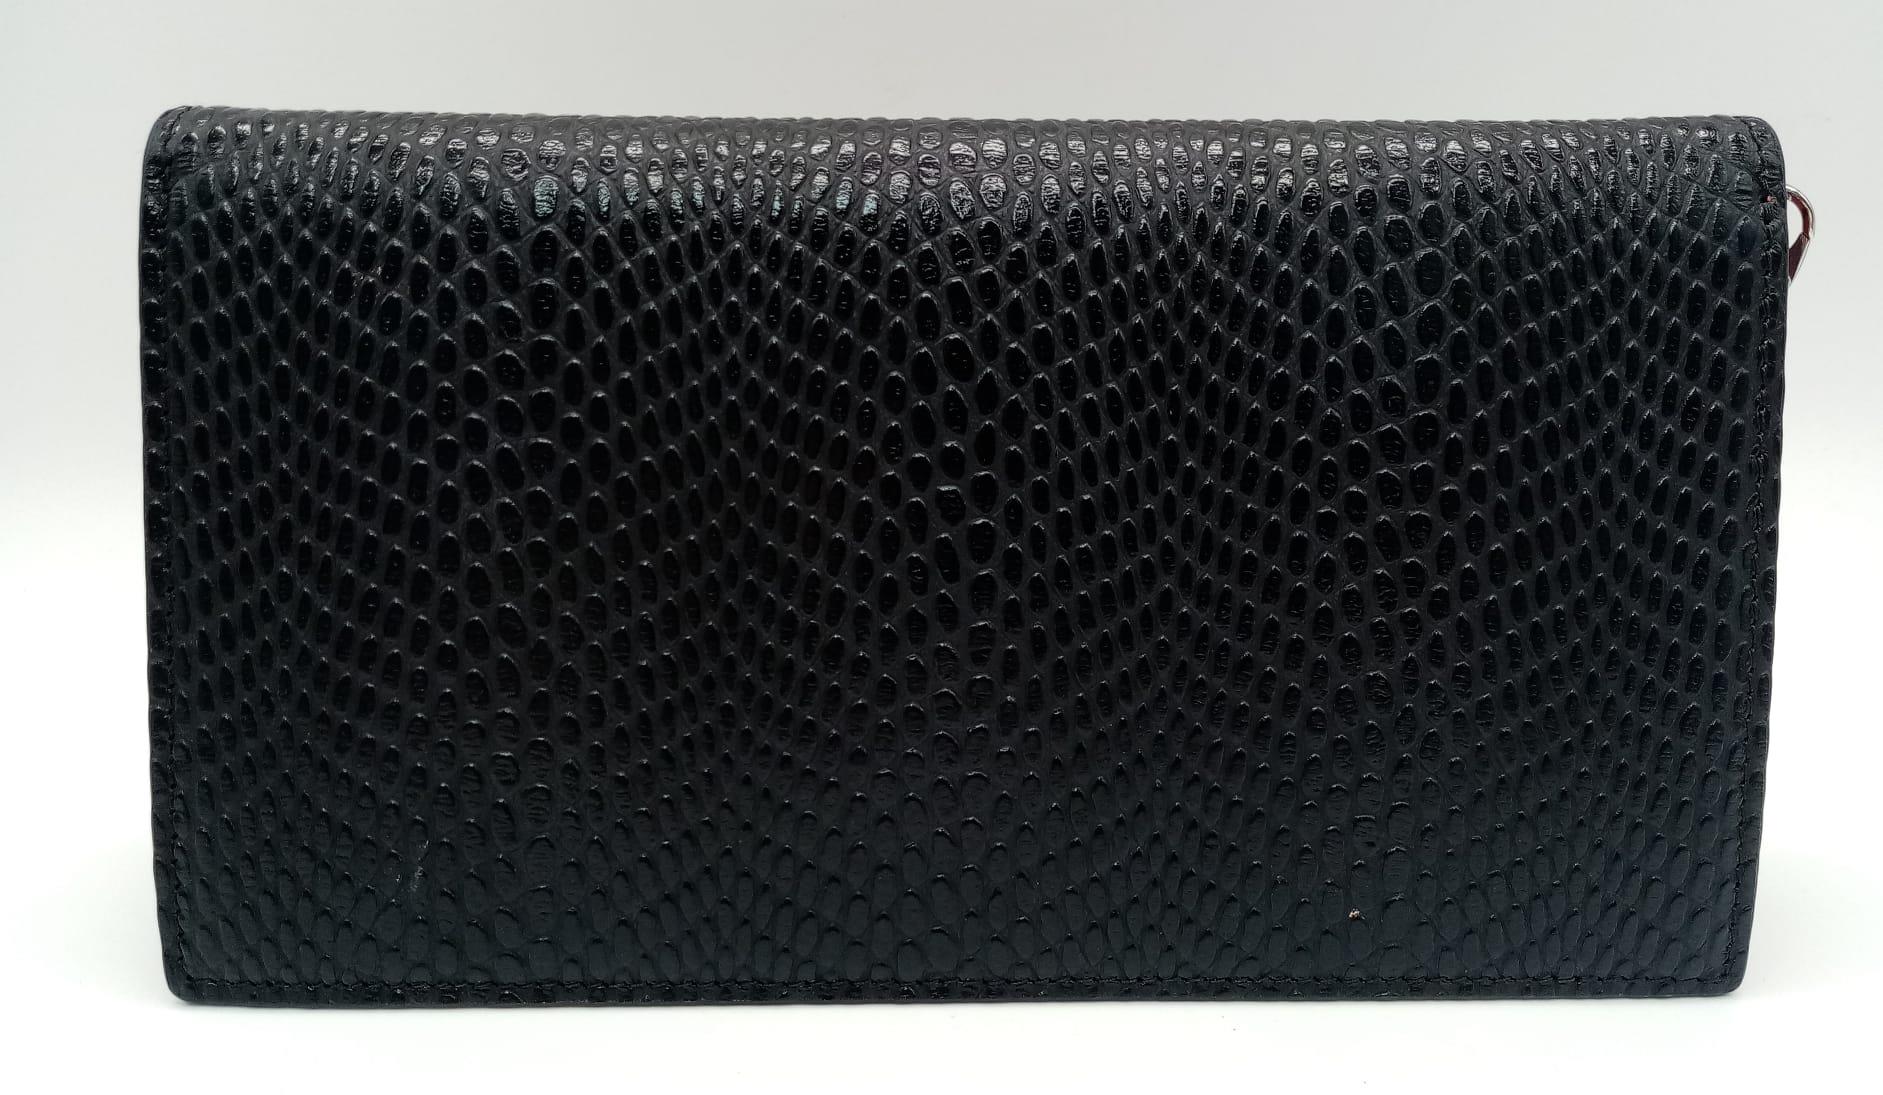 Black Loubi54 Snake Effect Leather Clutch Bag. With its sleek lines, the elegant Loubi54 clutch - Image 6 of 7